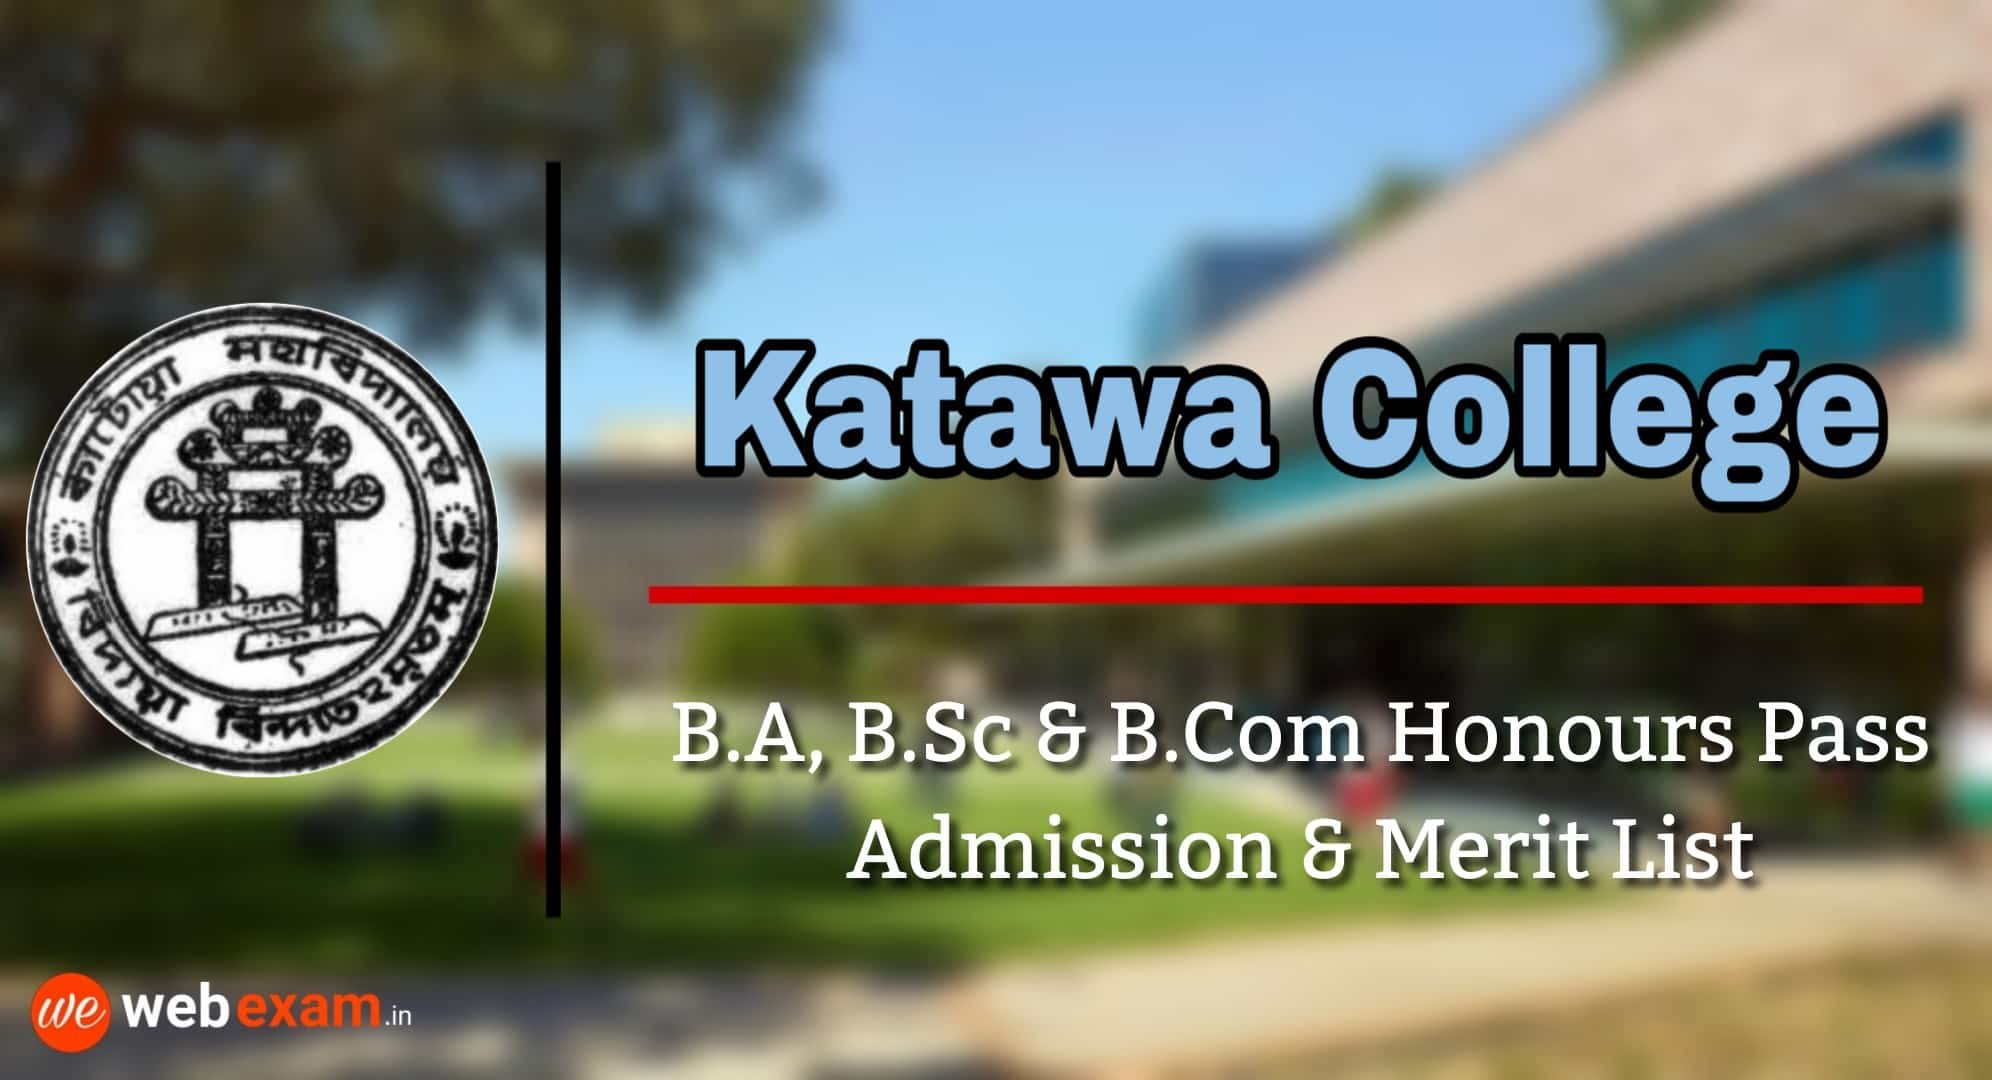 Katwa College Admisson Merit List